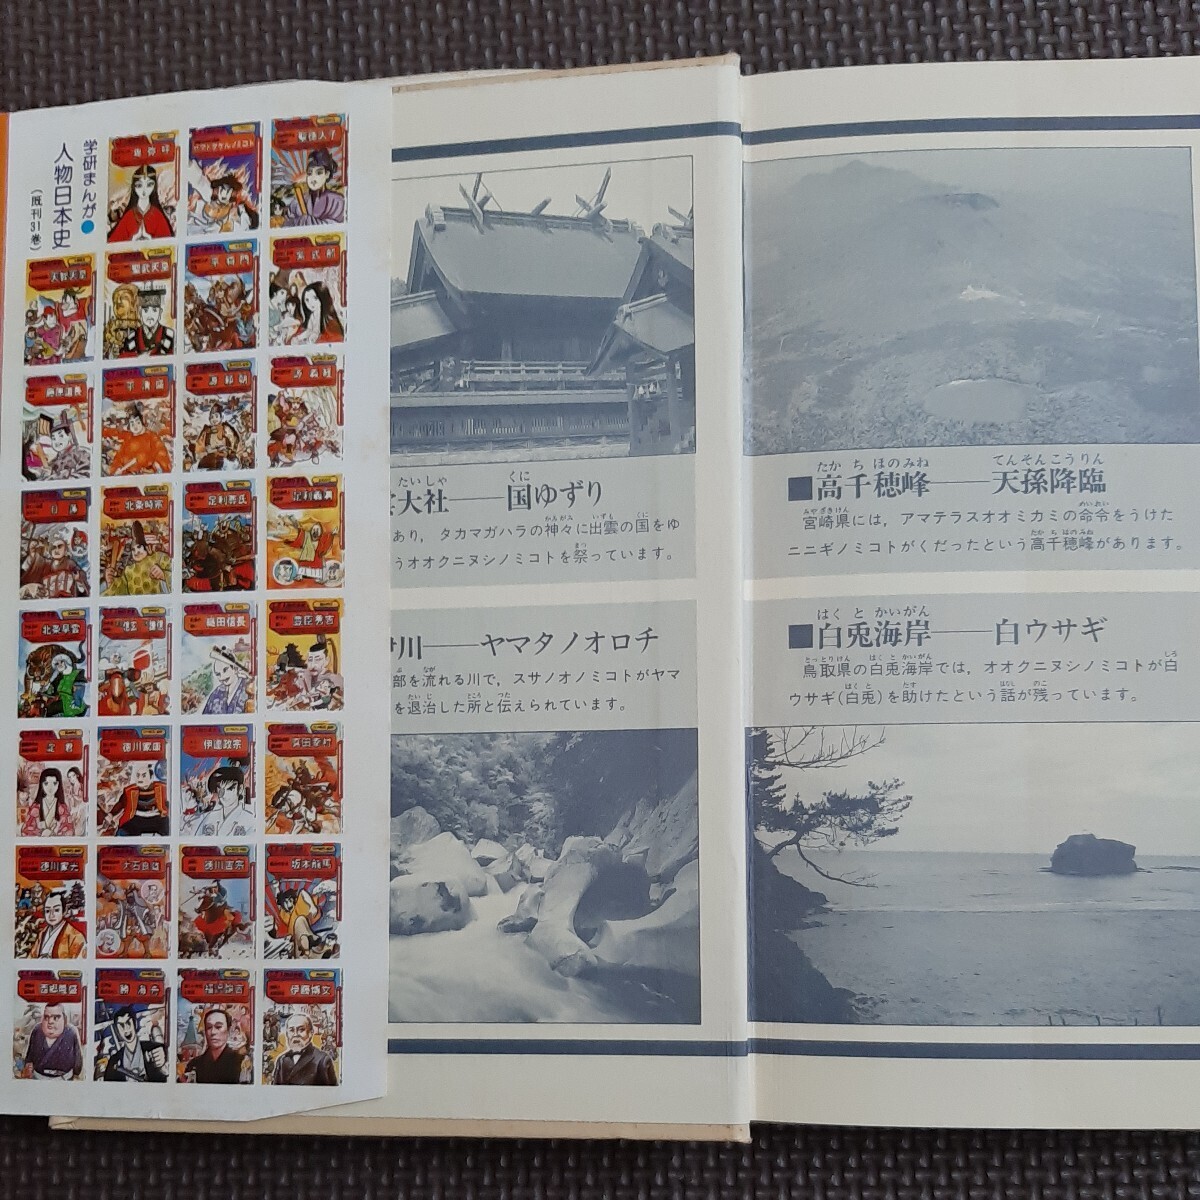  Yamato takeru flea koto Gakken ... person history of Japan 